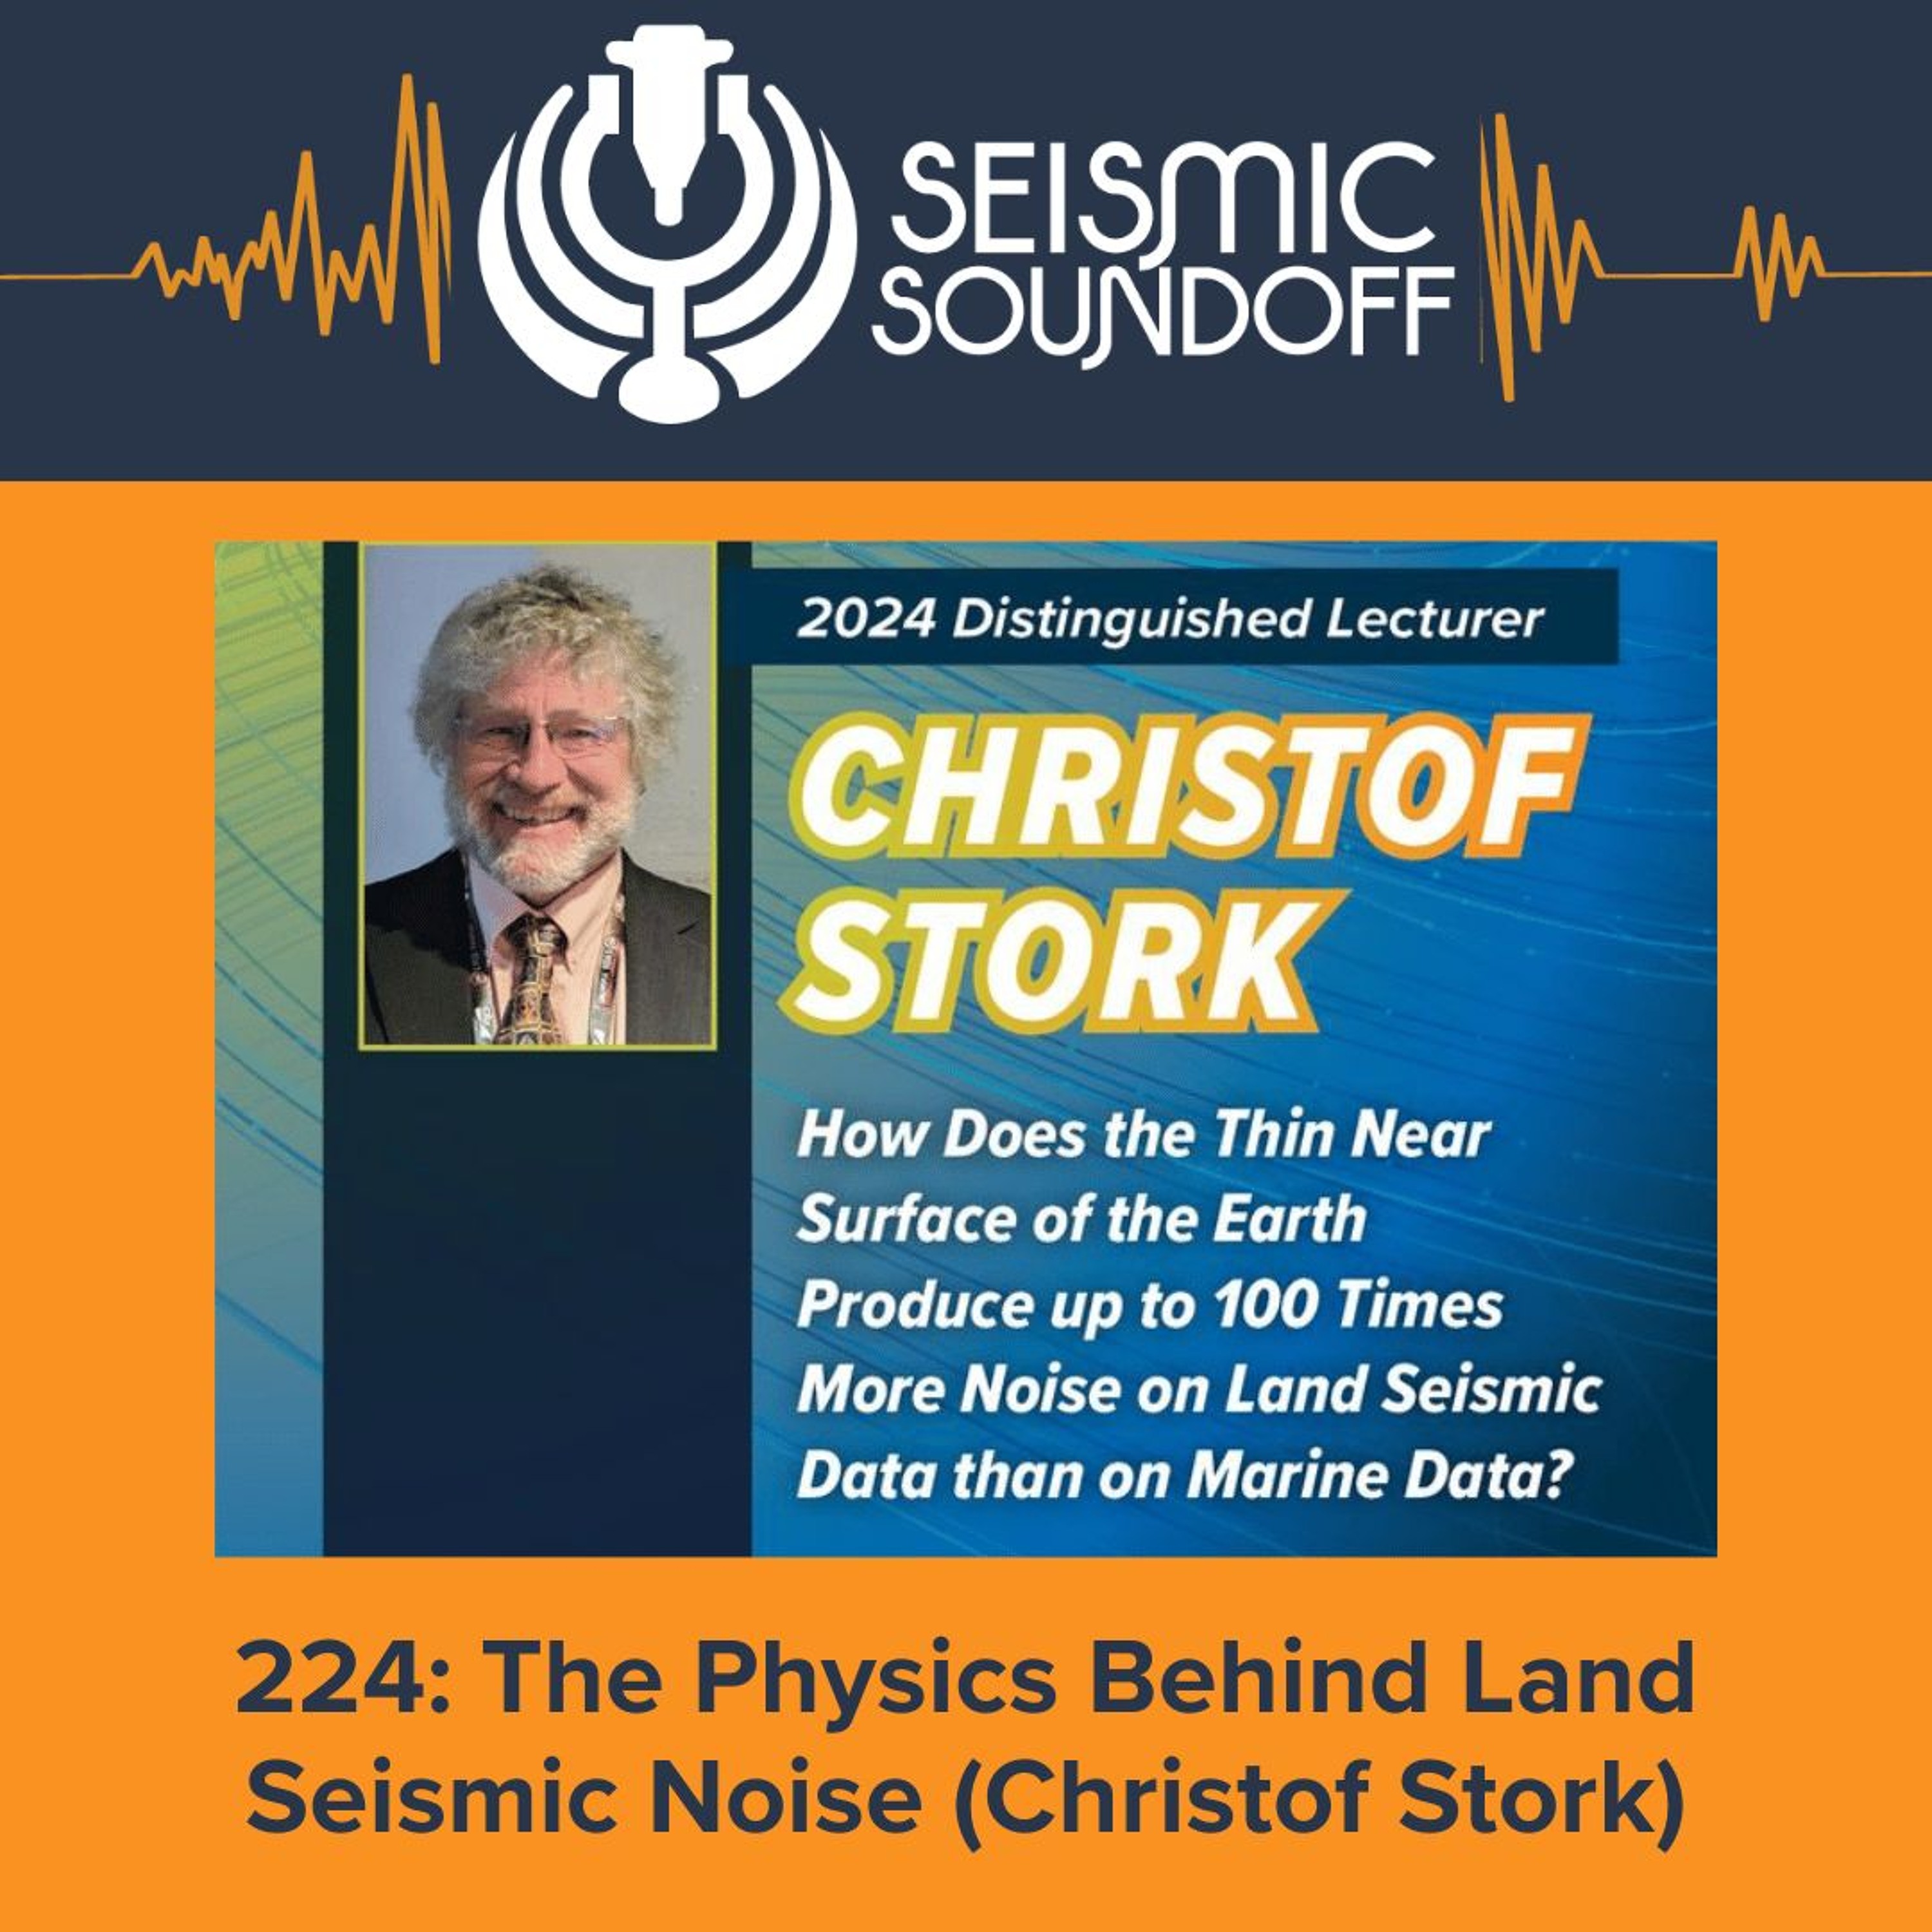 224: The Physics Behind Land Seismic Noise (Christof Stork)